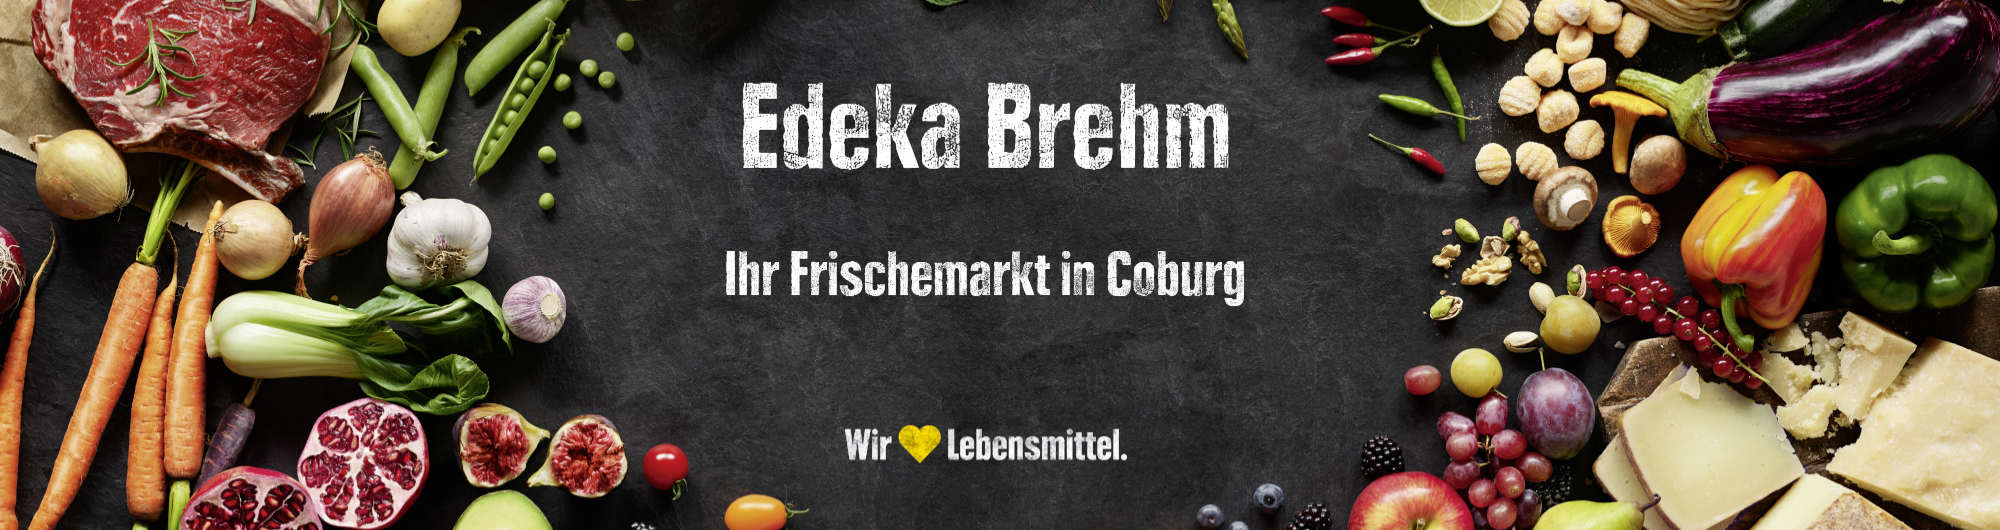 EDEKA Brehm Coburg